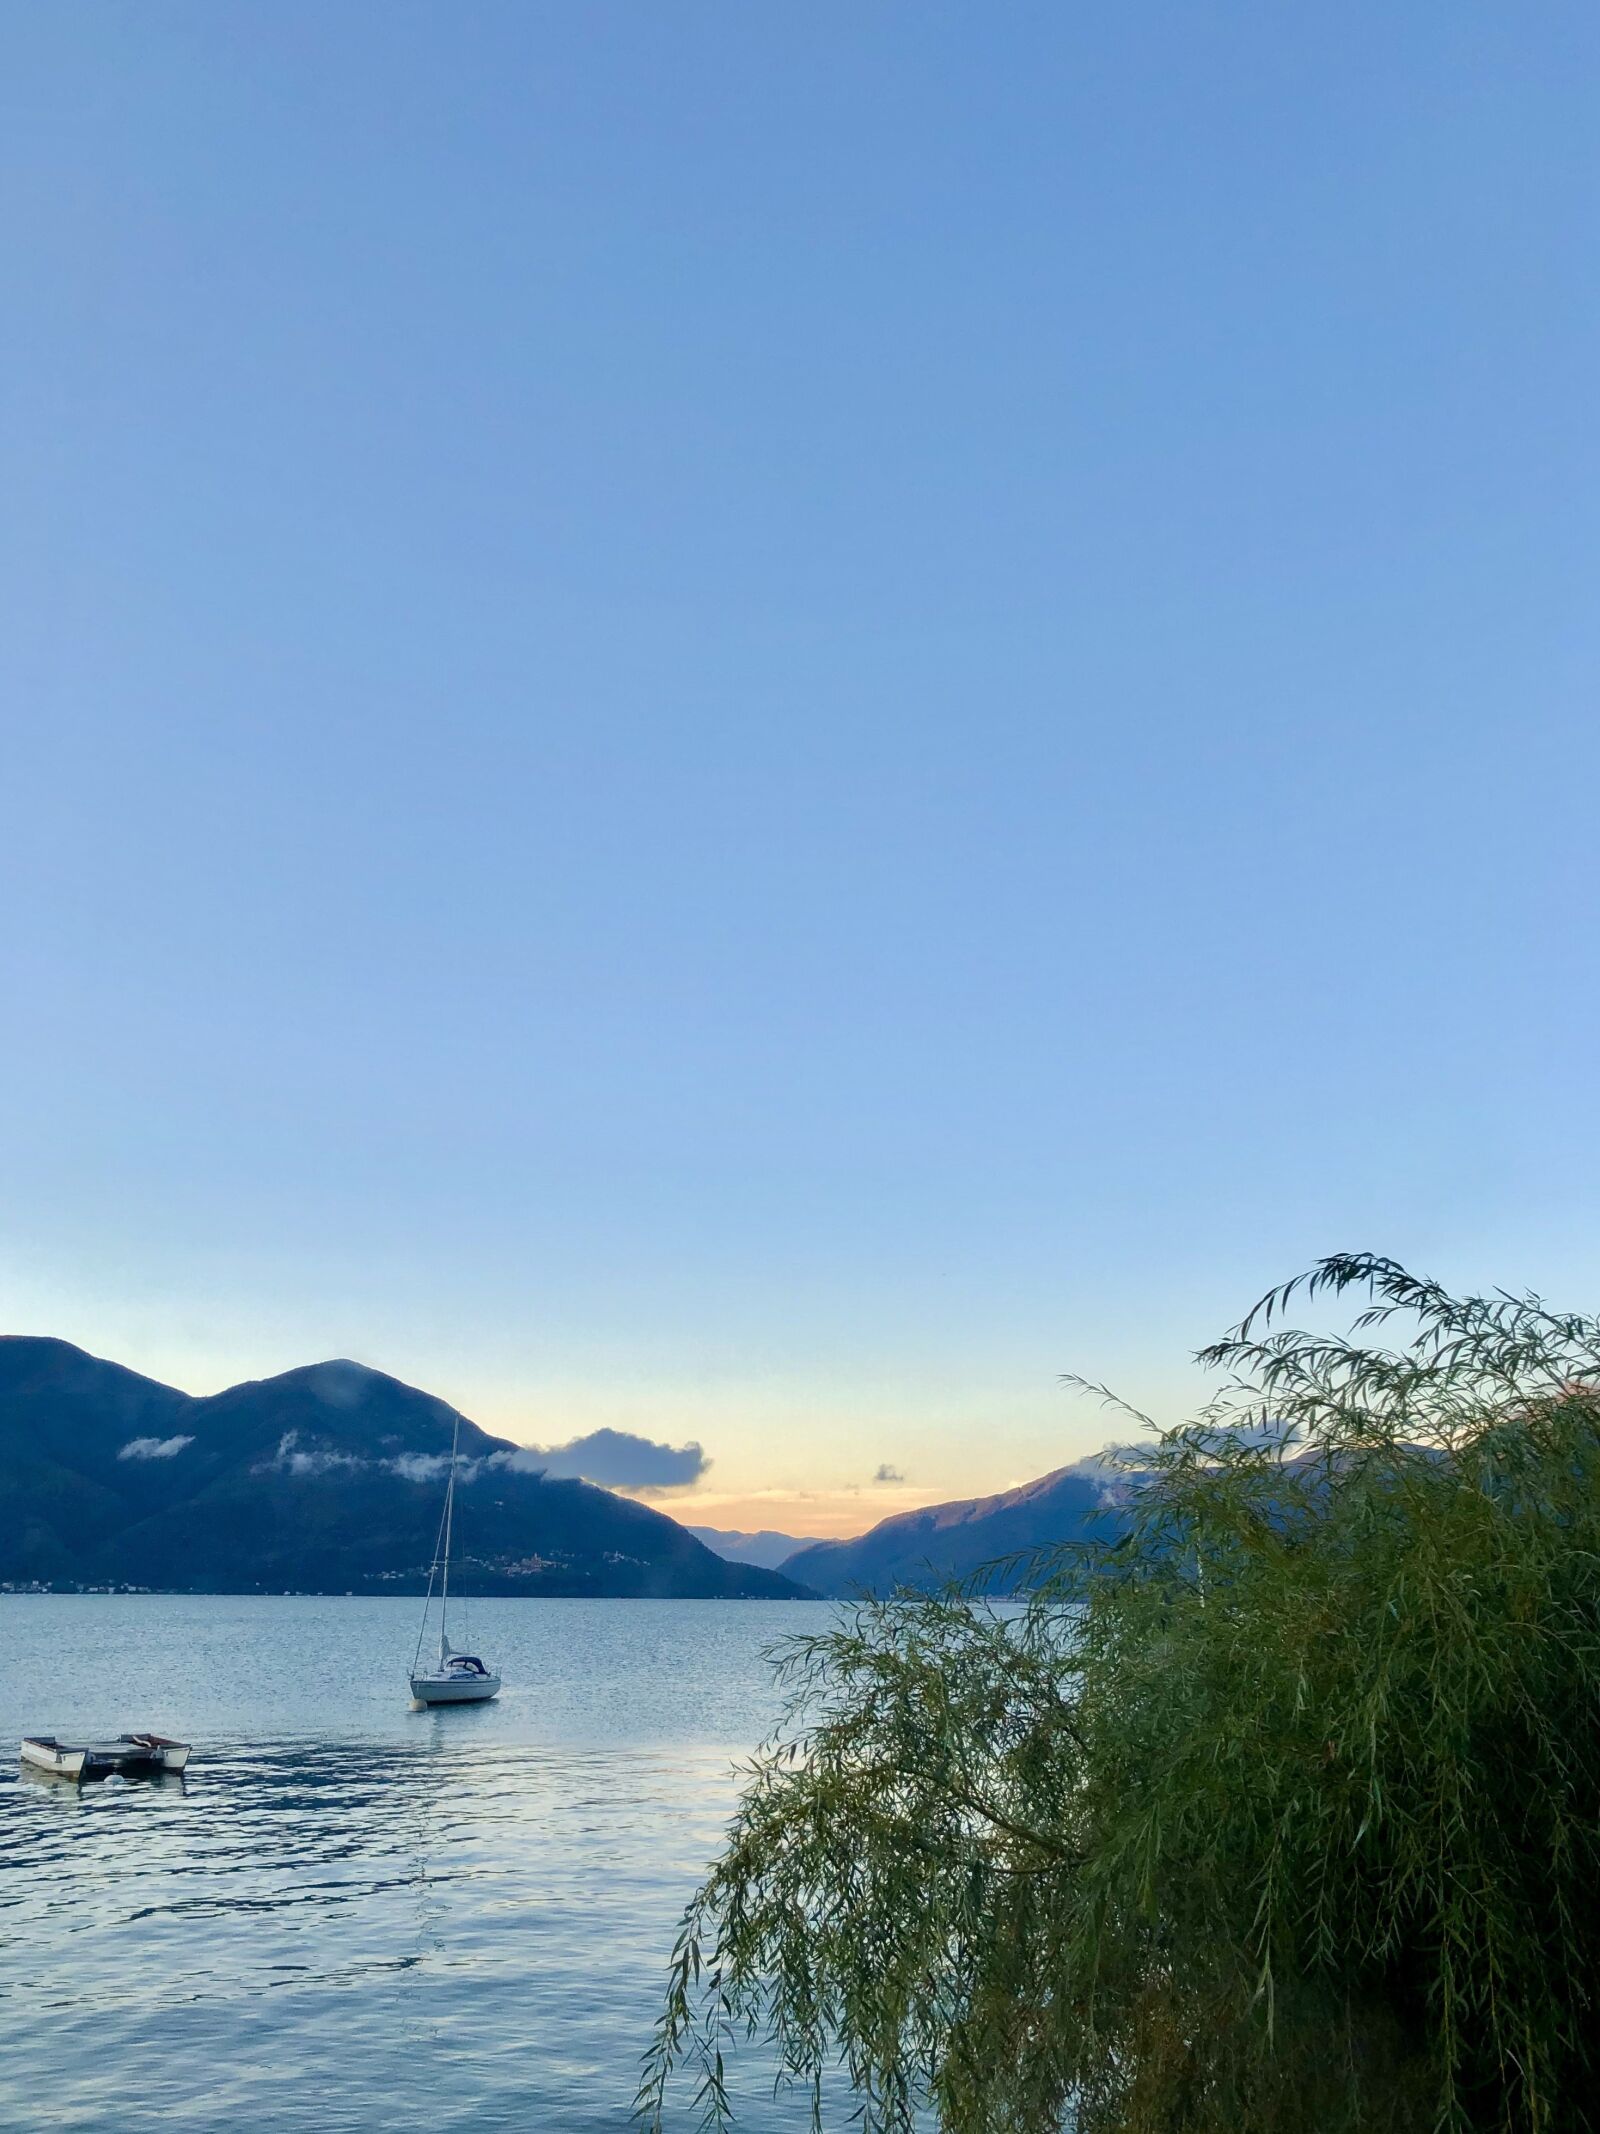 Apple iPhone X sample photo. Ticino, lago maggiore, sunset photography